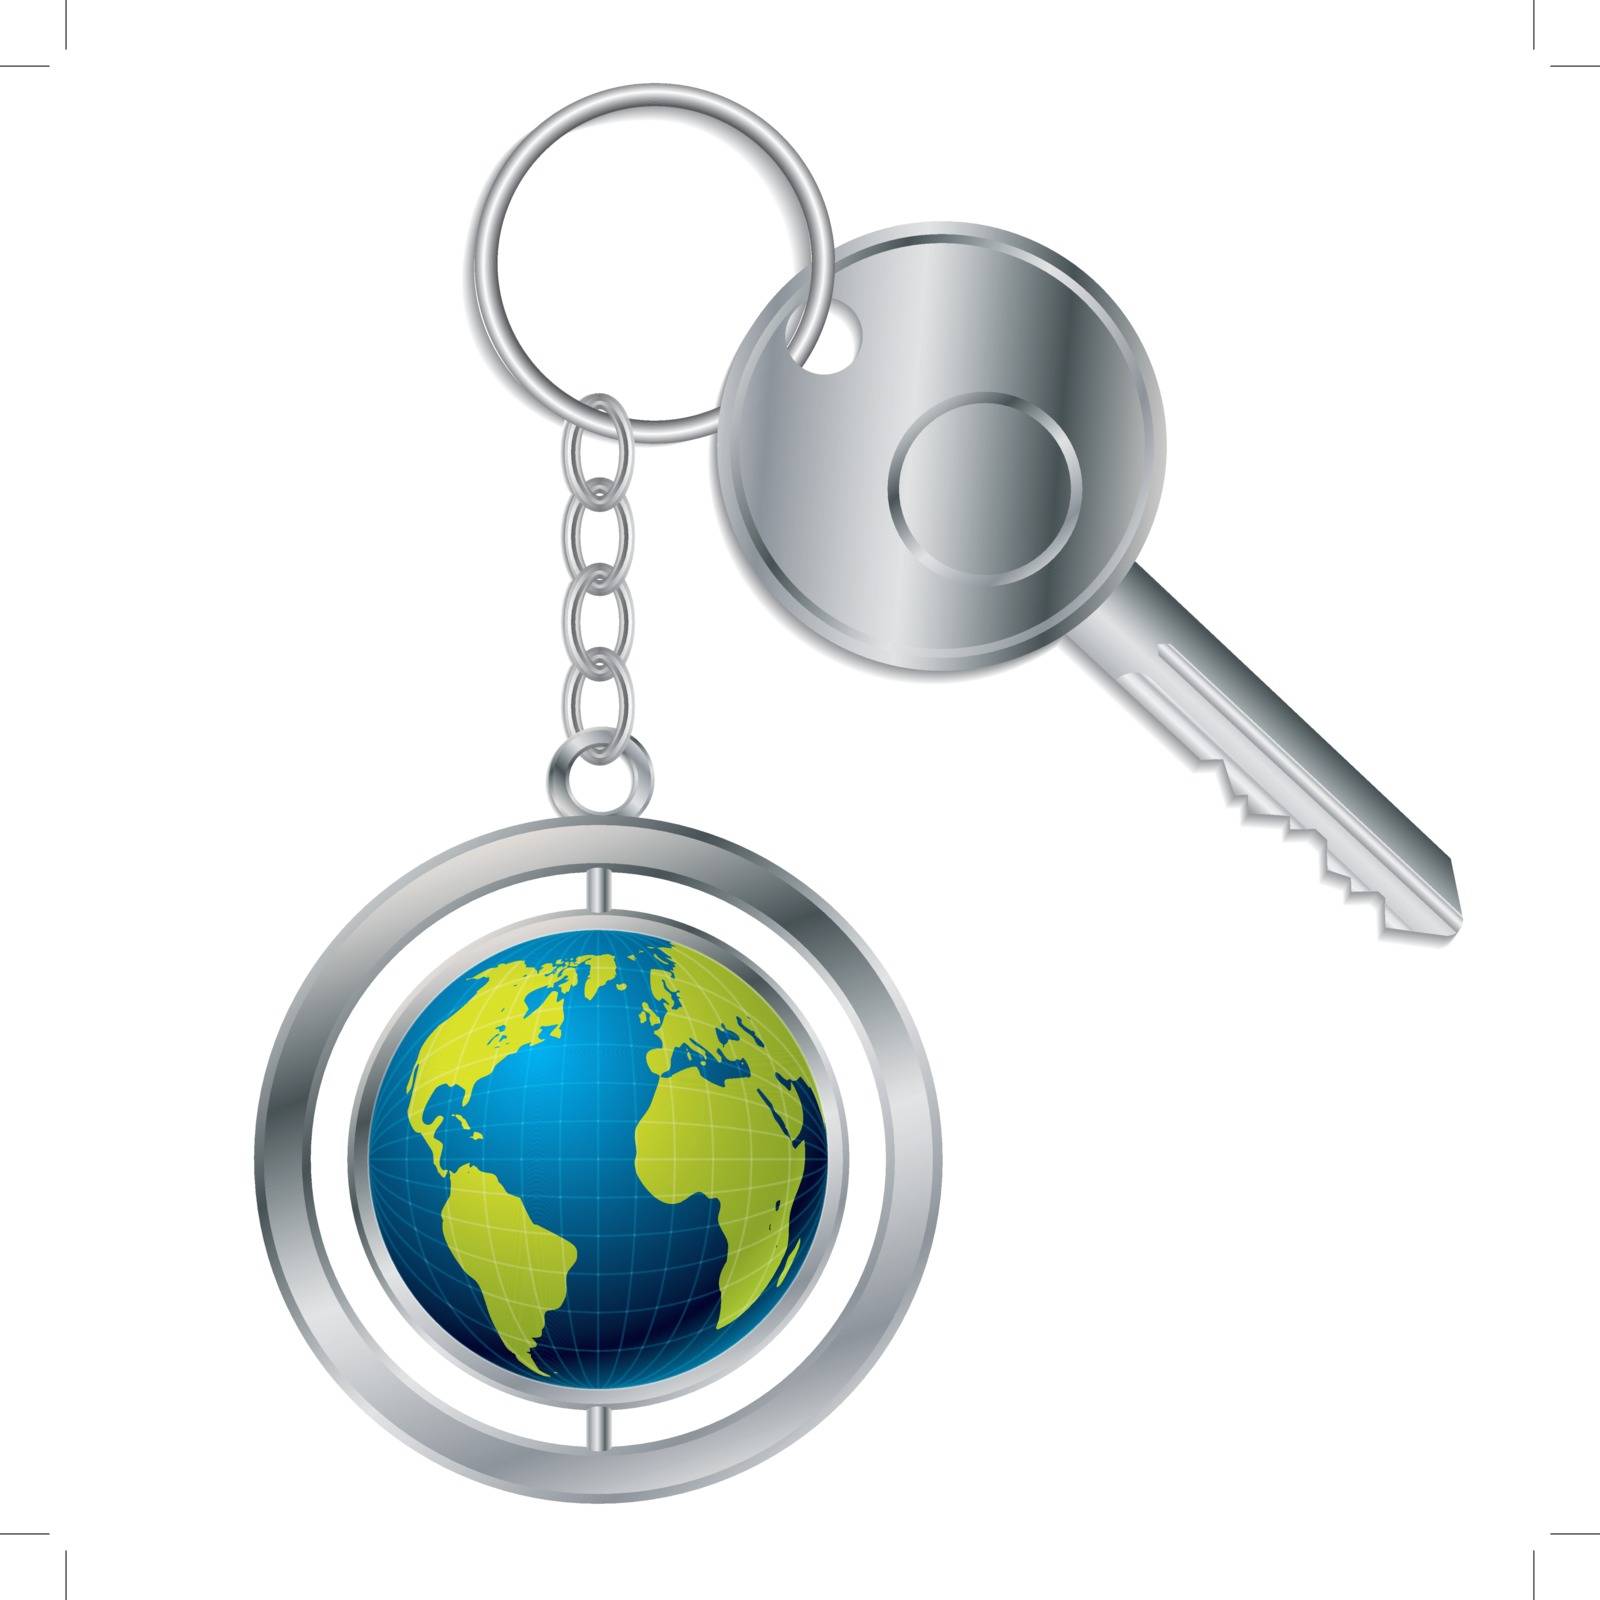 Globe keyholder with metallic key on white background